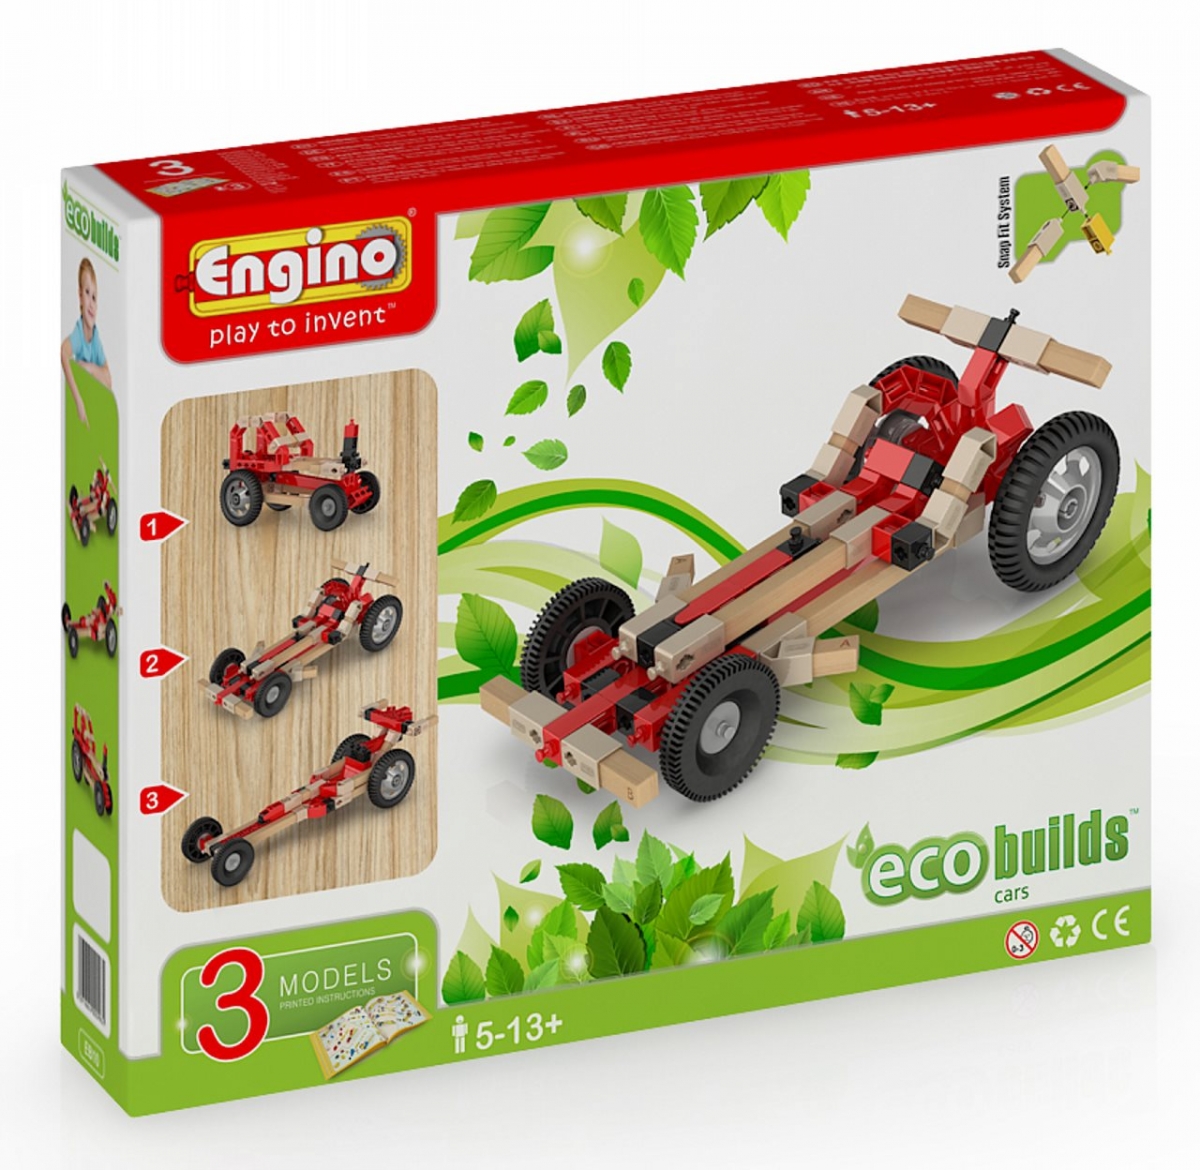   Engino Eco Builds 